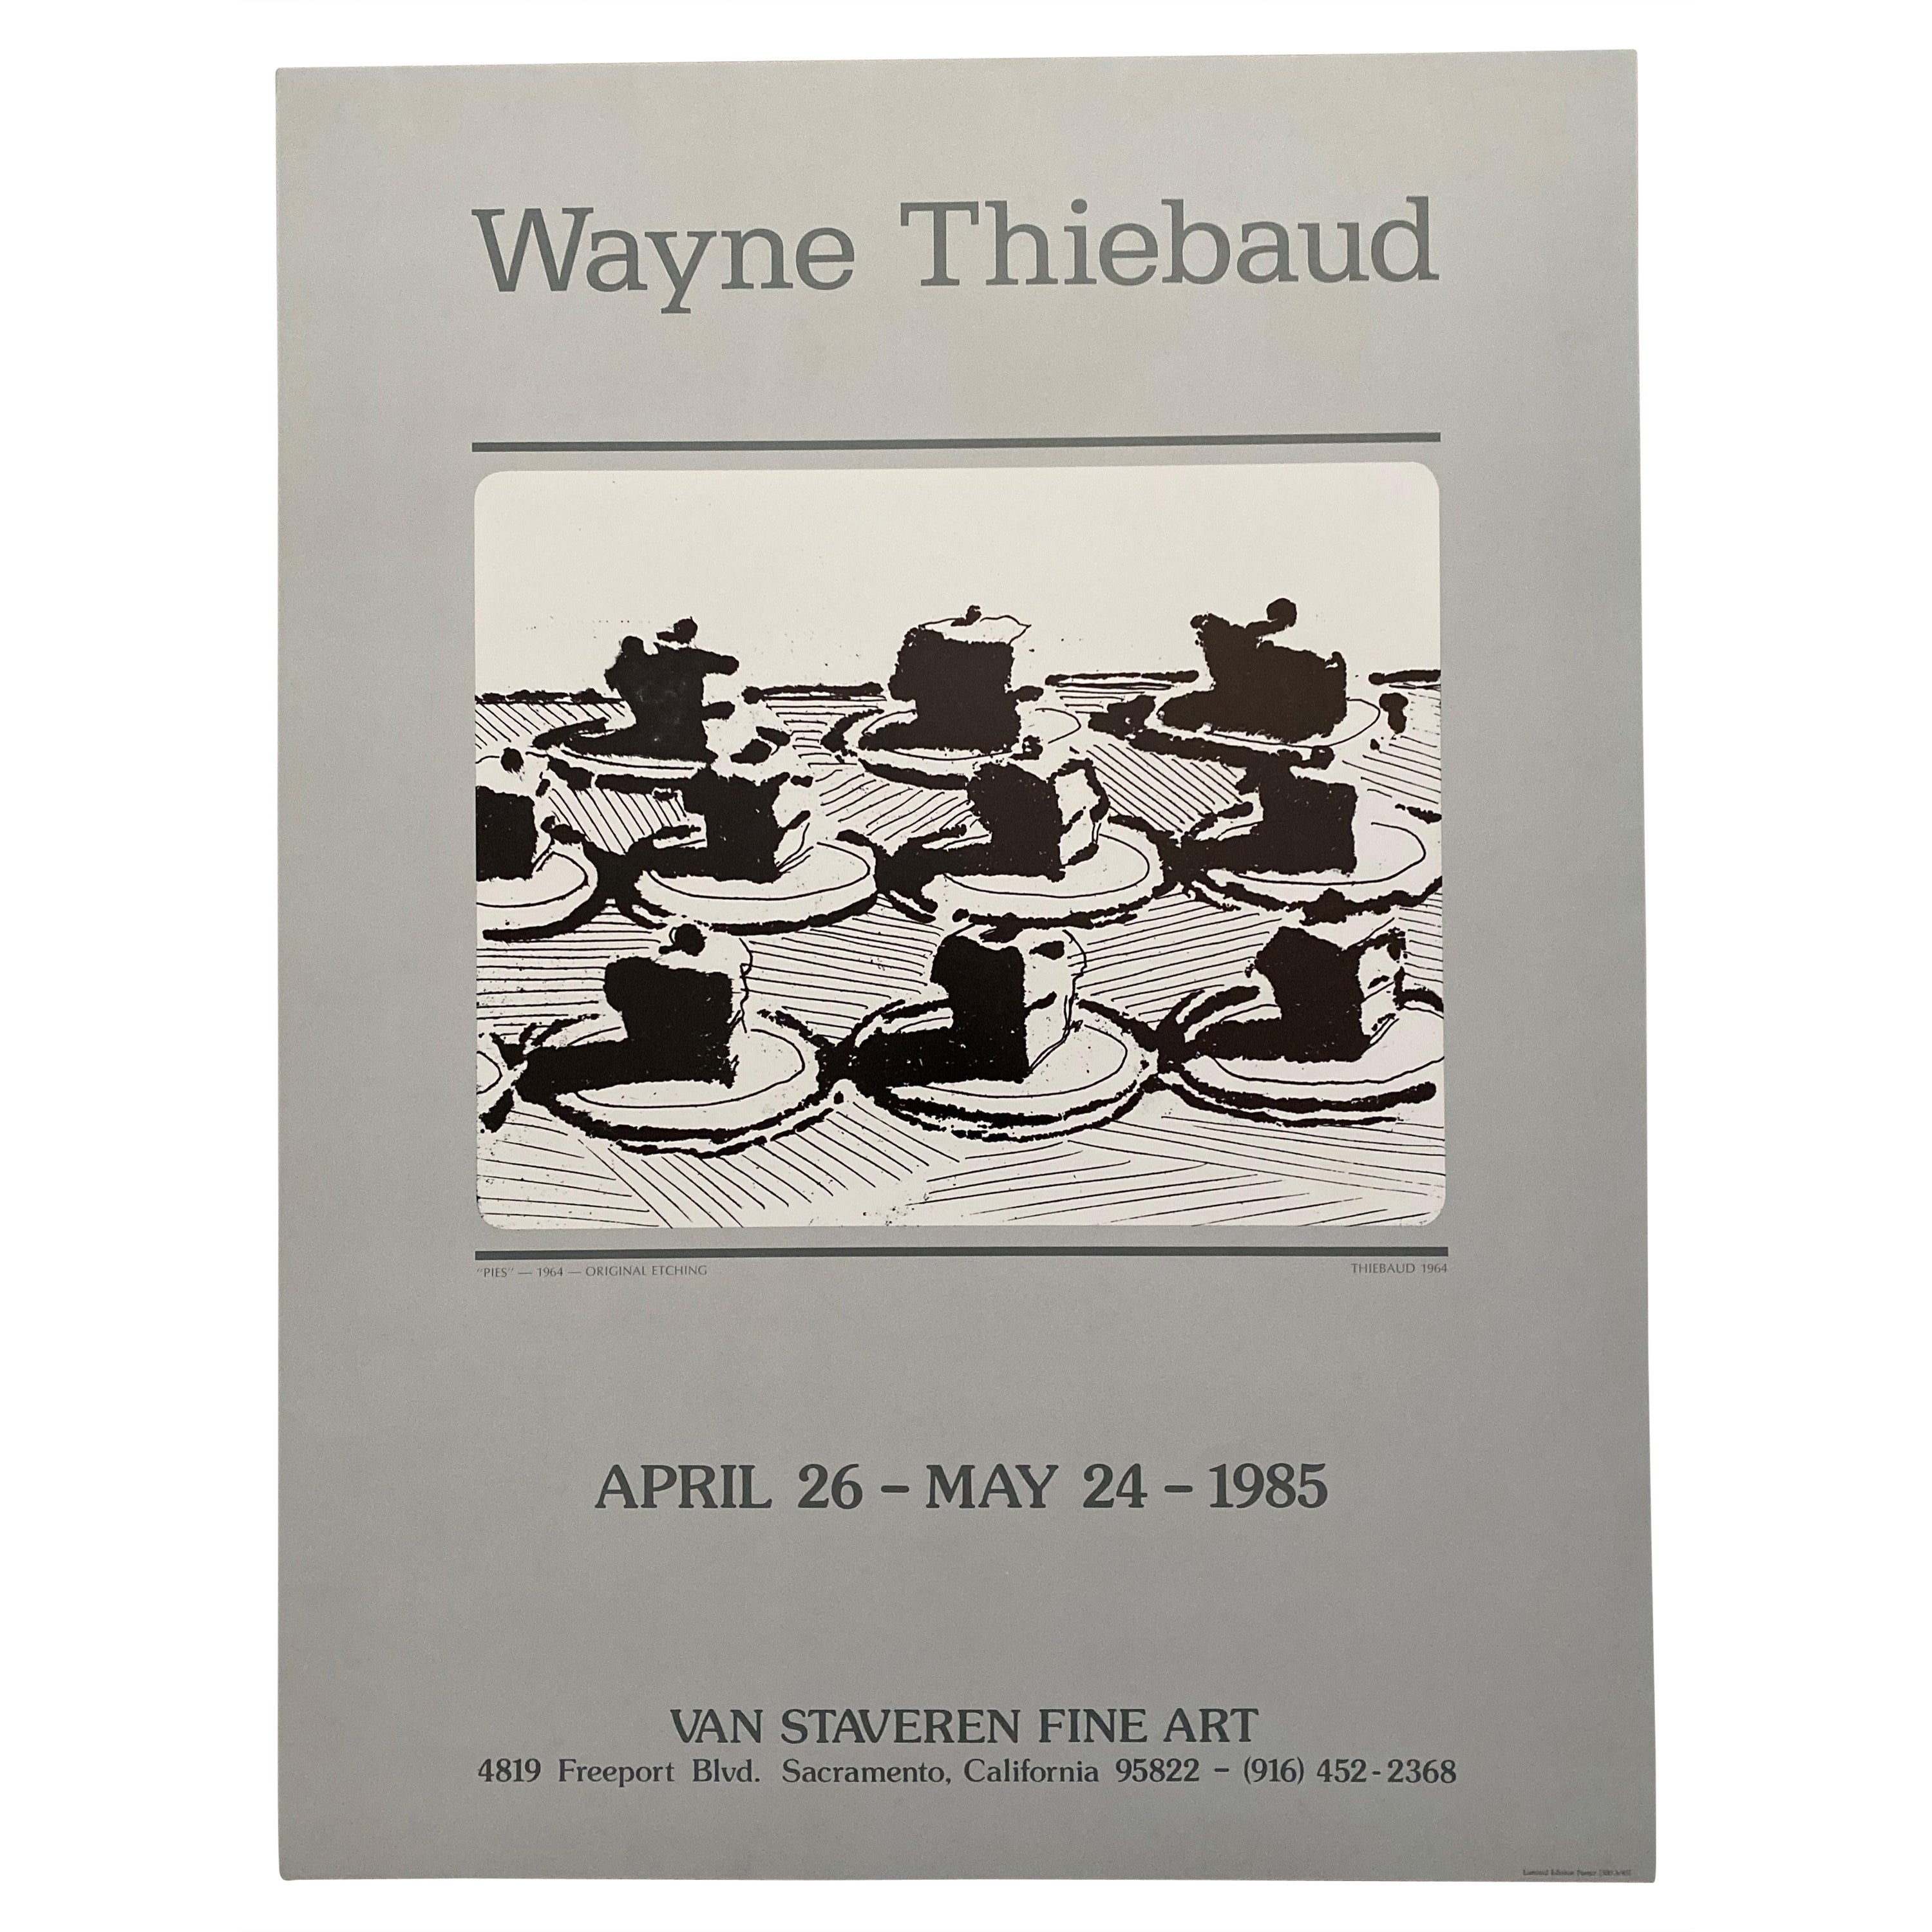 1985 Wayne Thiebaud "Pies" Limited Edition Exhibition Print